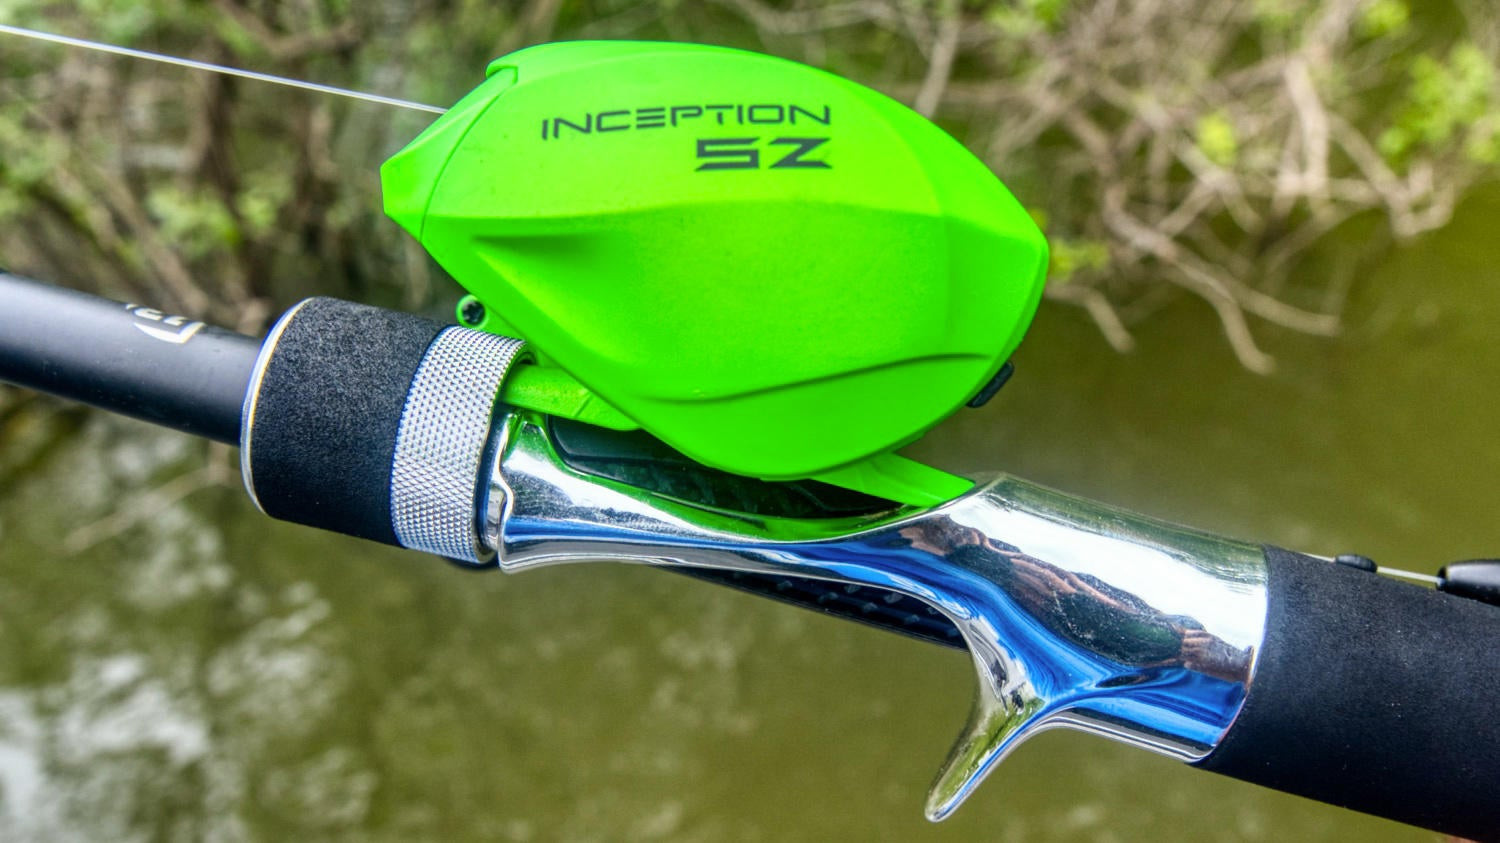 13 Fishing Inception Sport Z 7.3:1 Low Profile Lure Fishing Reel